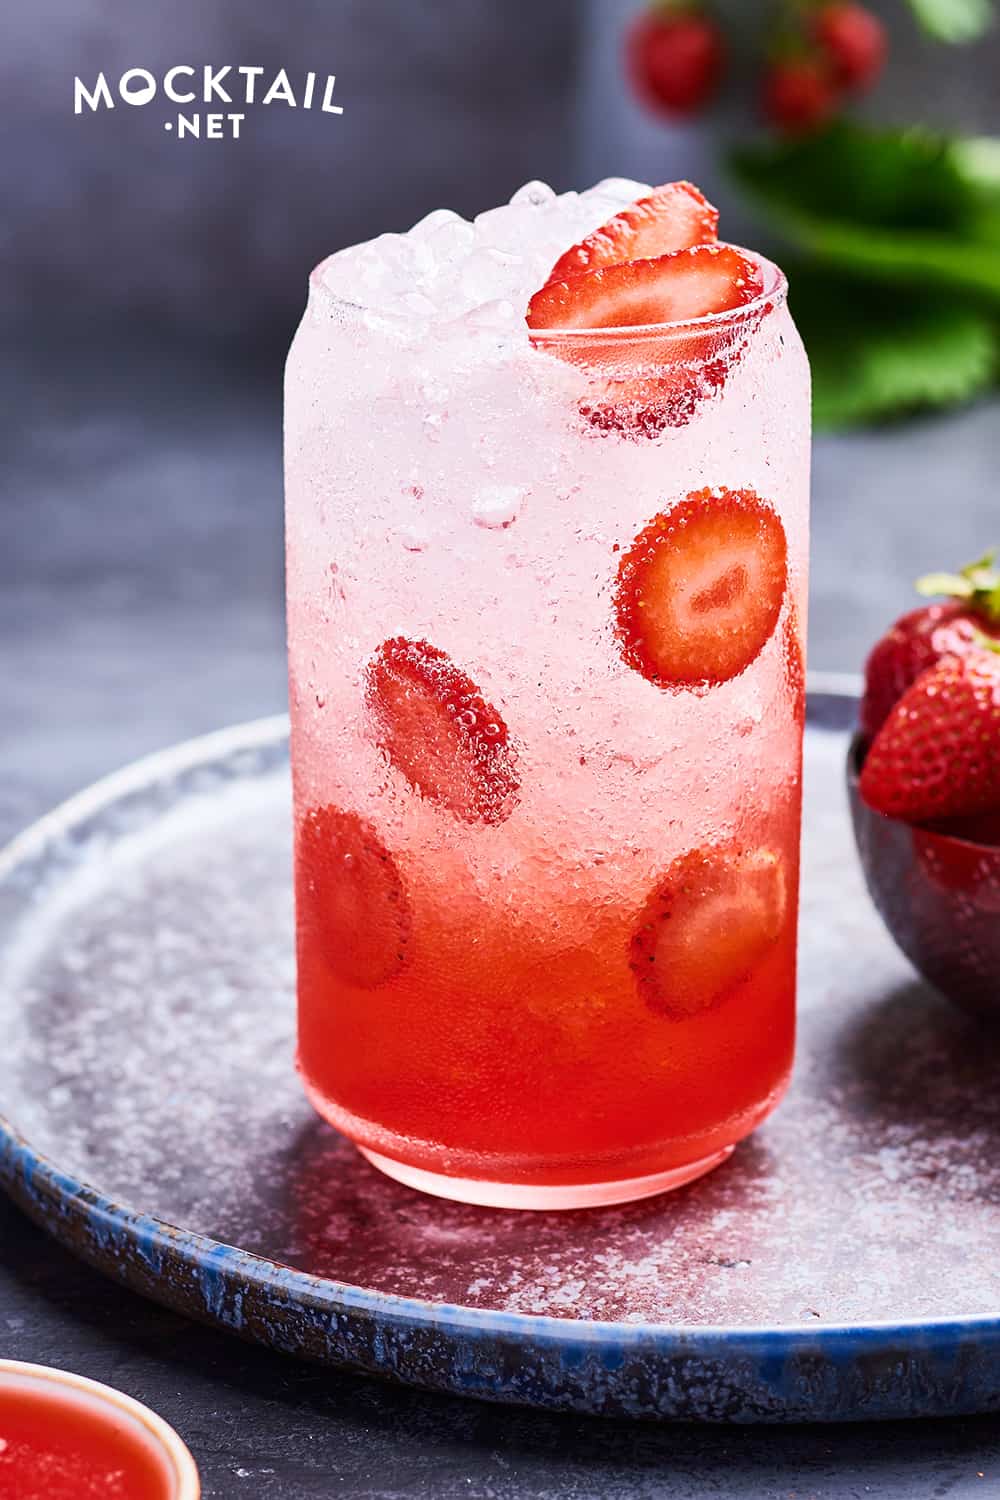 Strawberry soda tastes fresh and fruity.